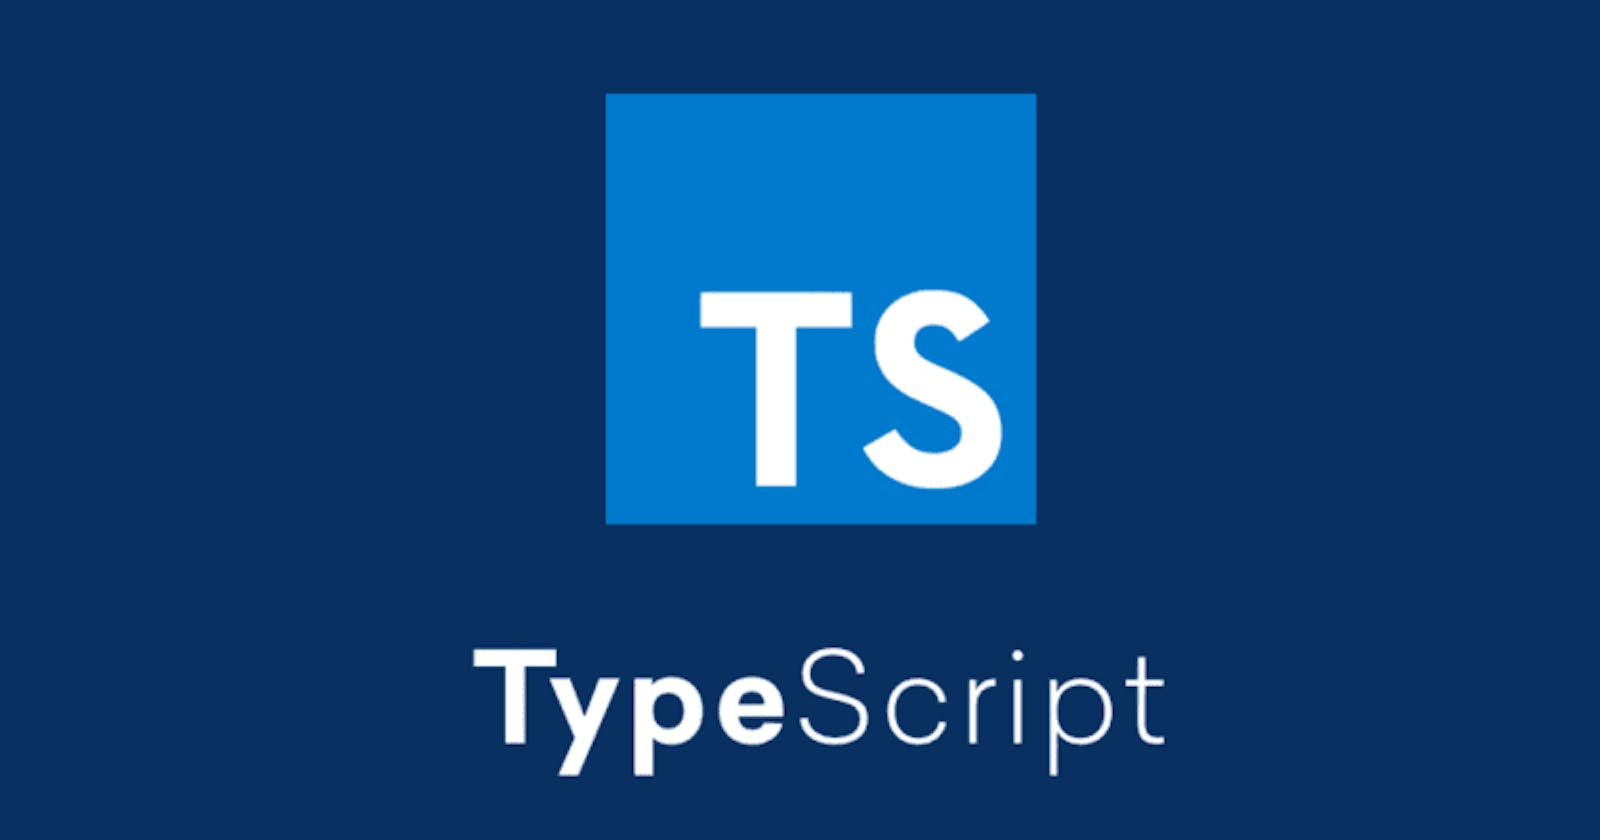 Typescript - beyond the basics